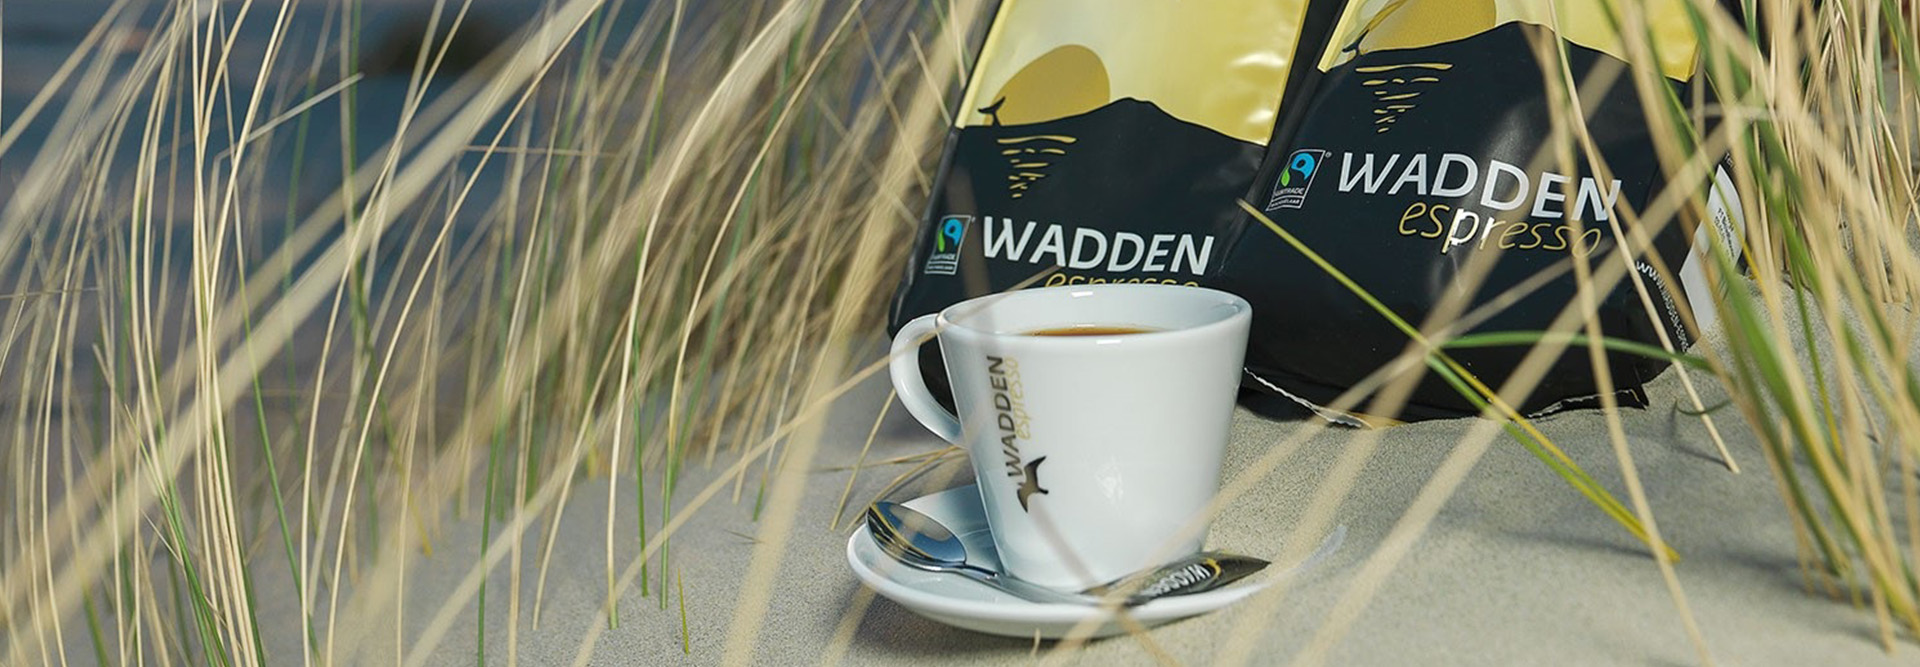 1.1.4.desktopheader-Wadden-espressoV2-DEAC-Koffie-Experts_1920x667.jpg